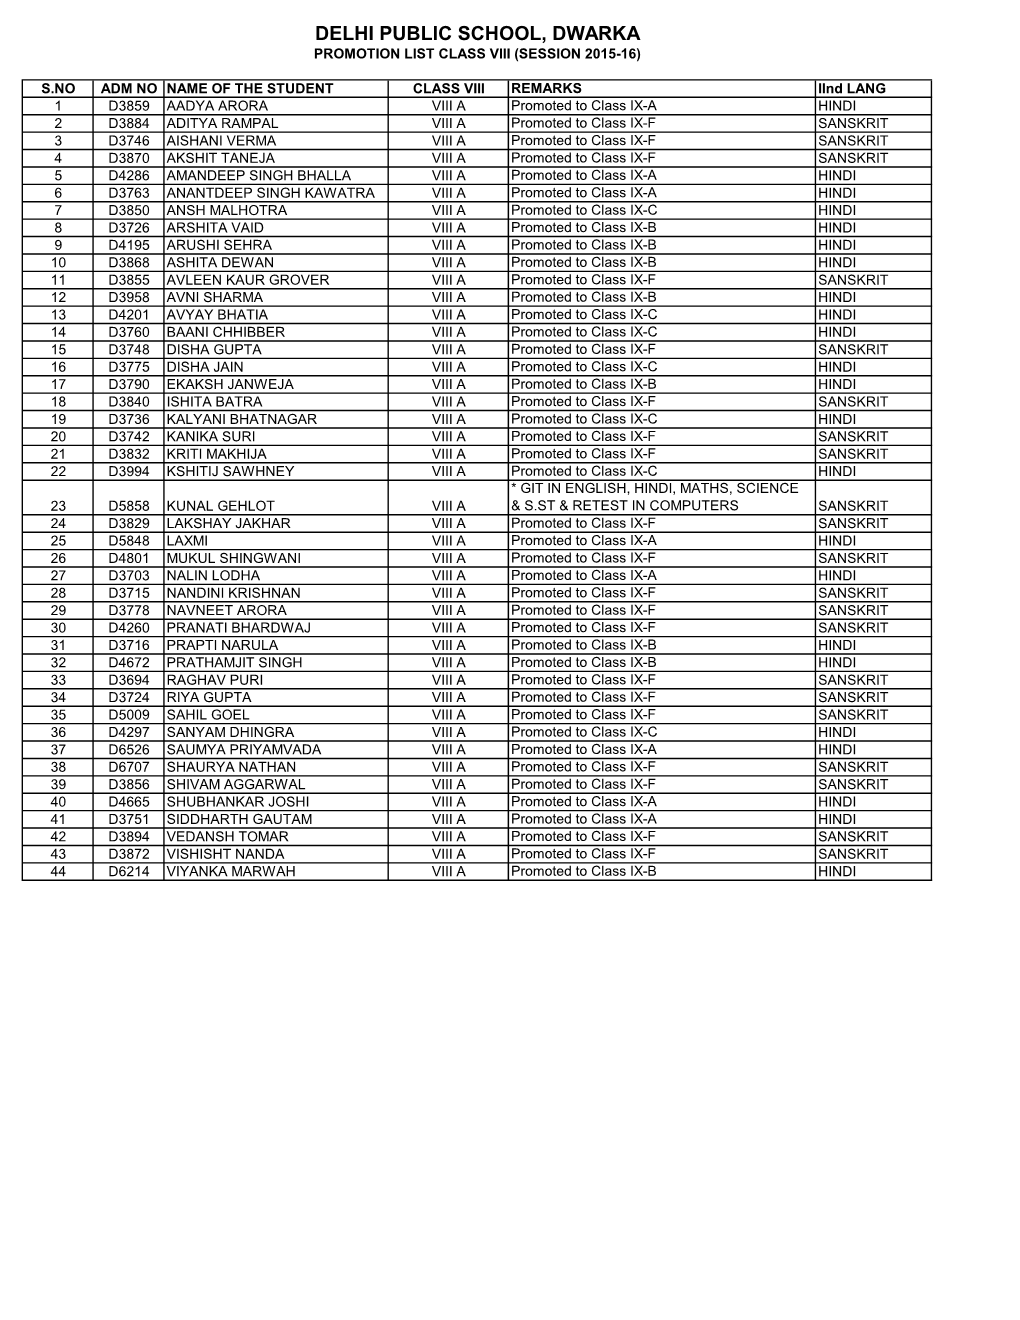 Delhi Public School, Dwarka Promotion List Class Viii (Session 2015-16)